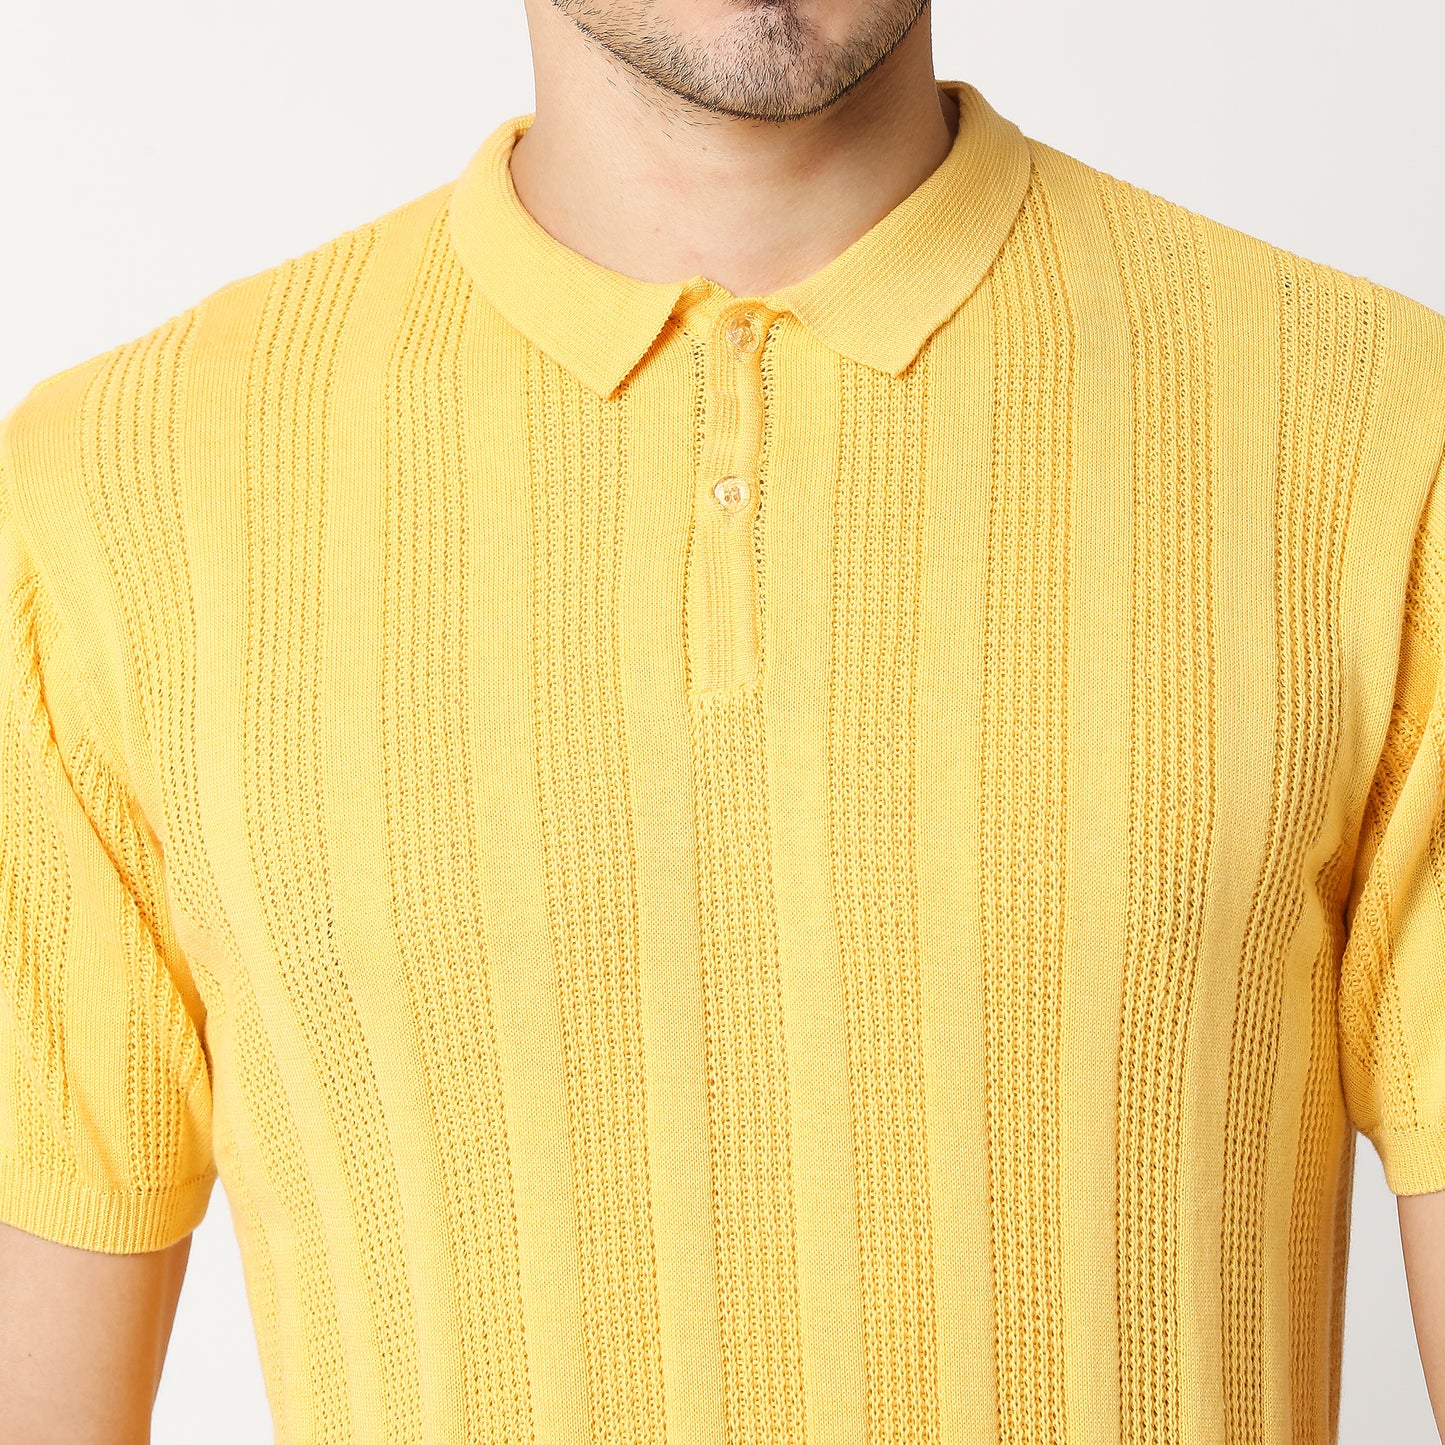 Fostino Alpha Knitted Yellow Polo T-Shirt - Fostino - T-Shirts